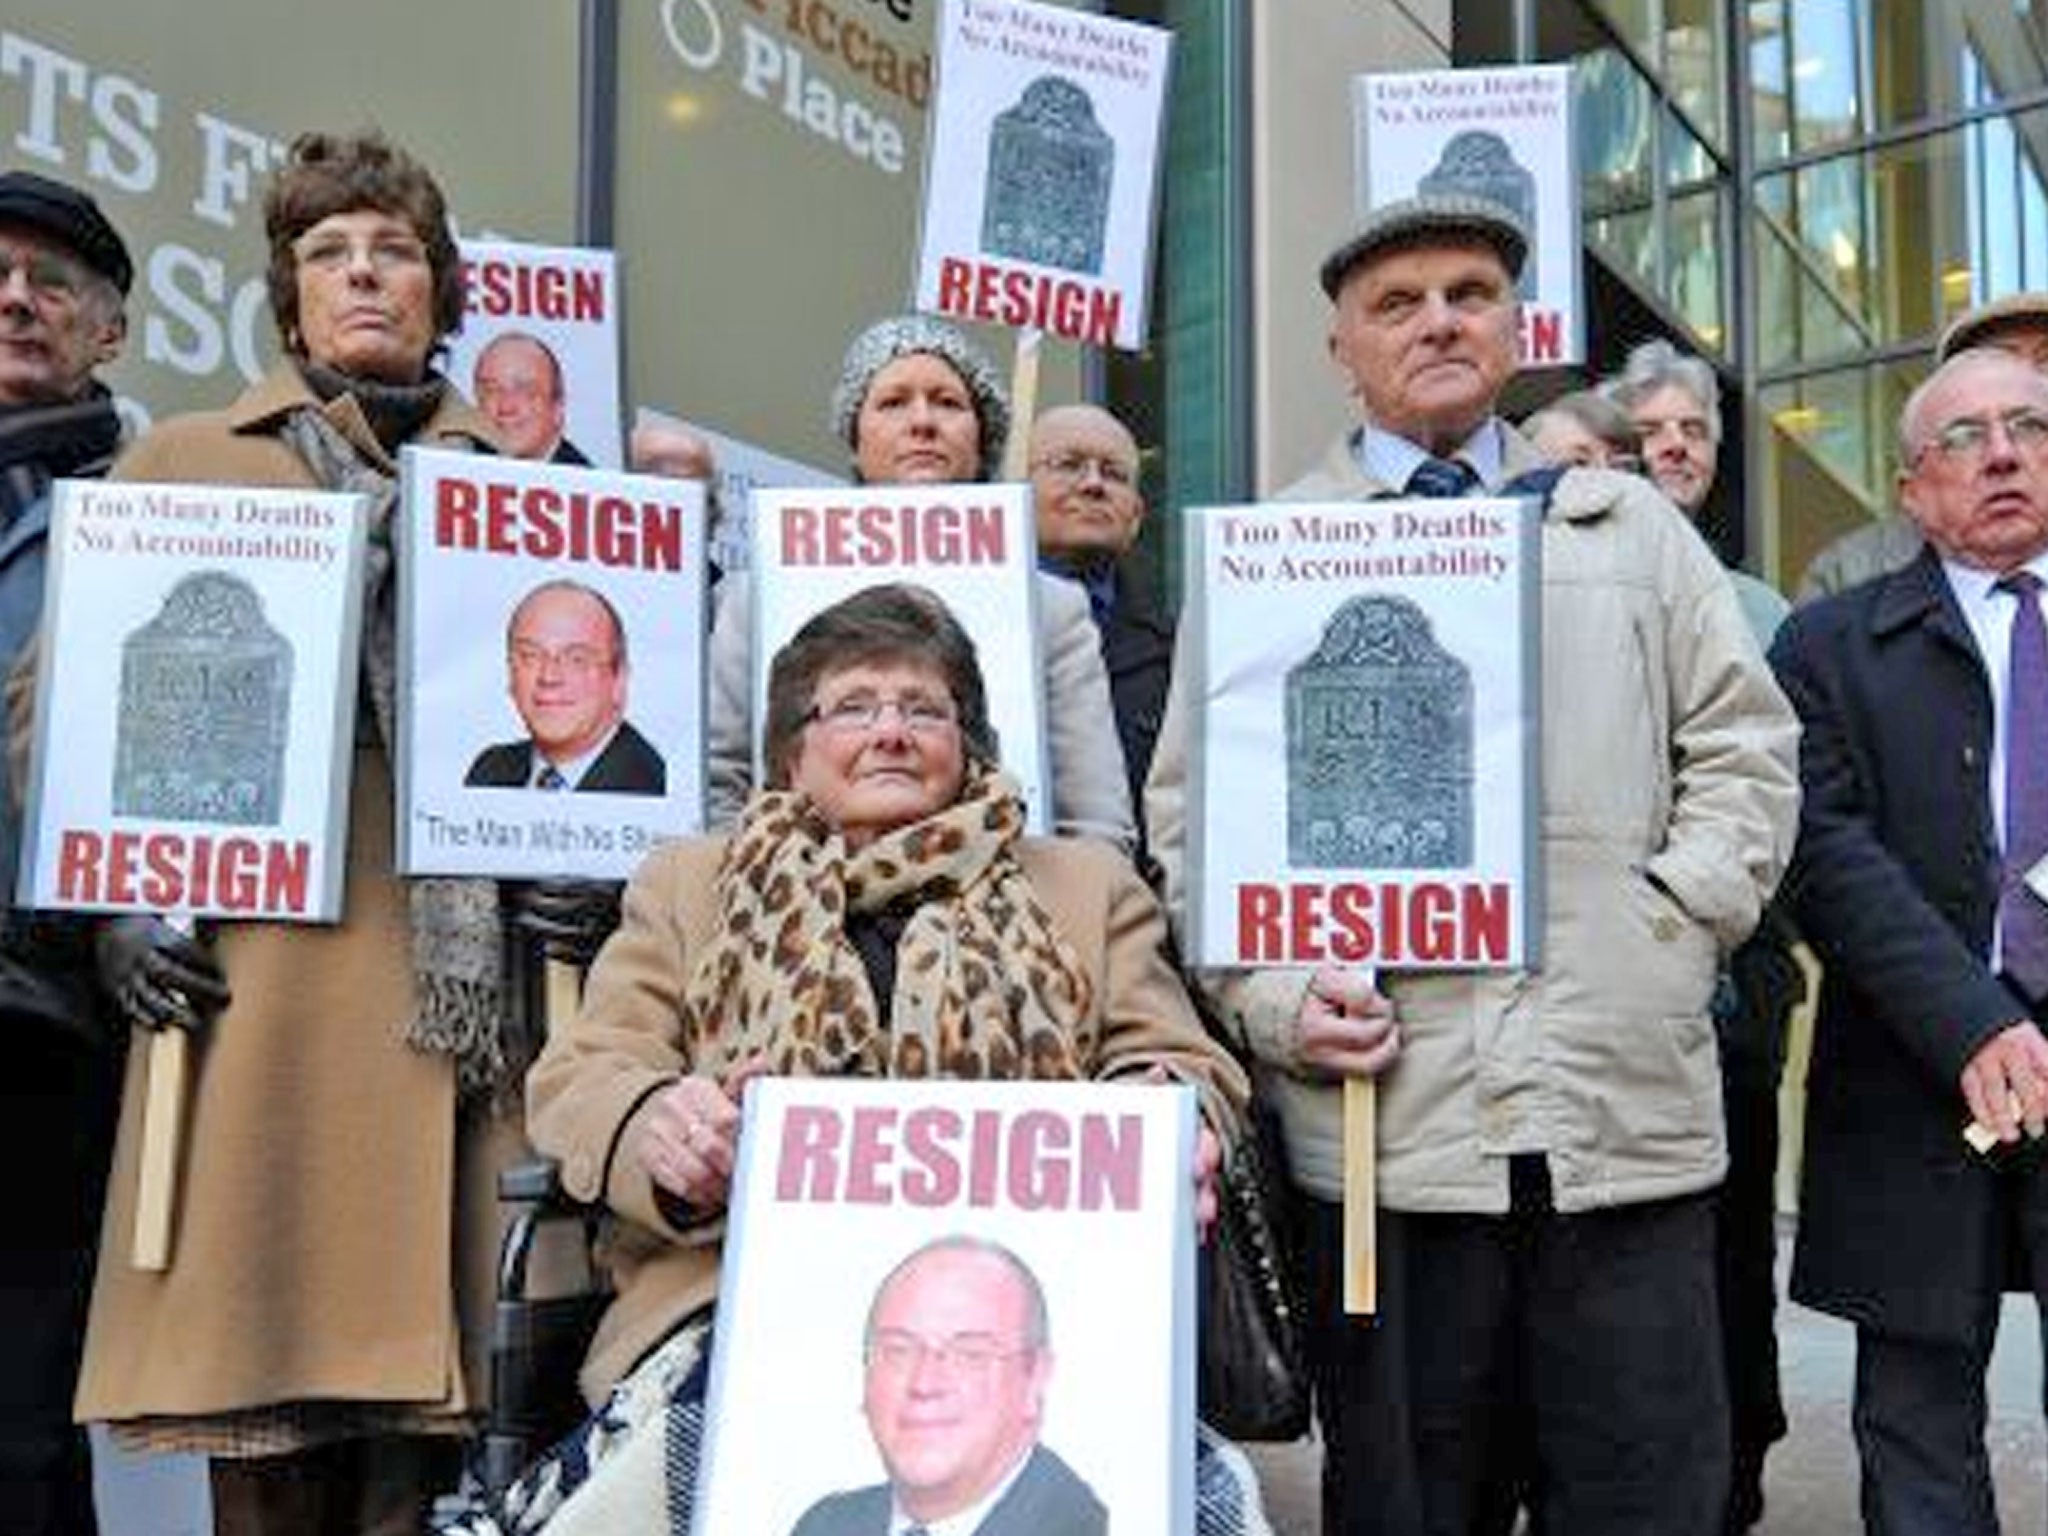 Protesters in London demand that Sir David Nicholson go